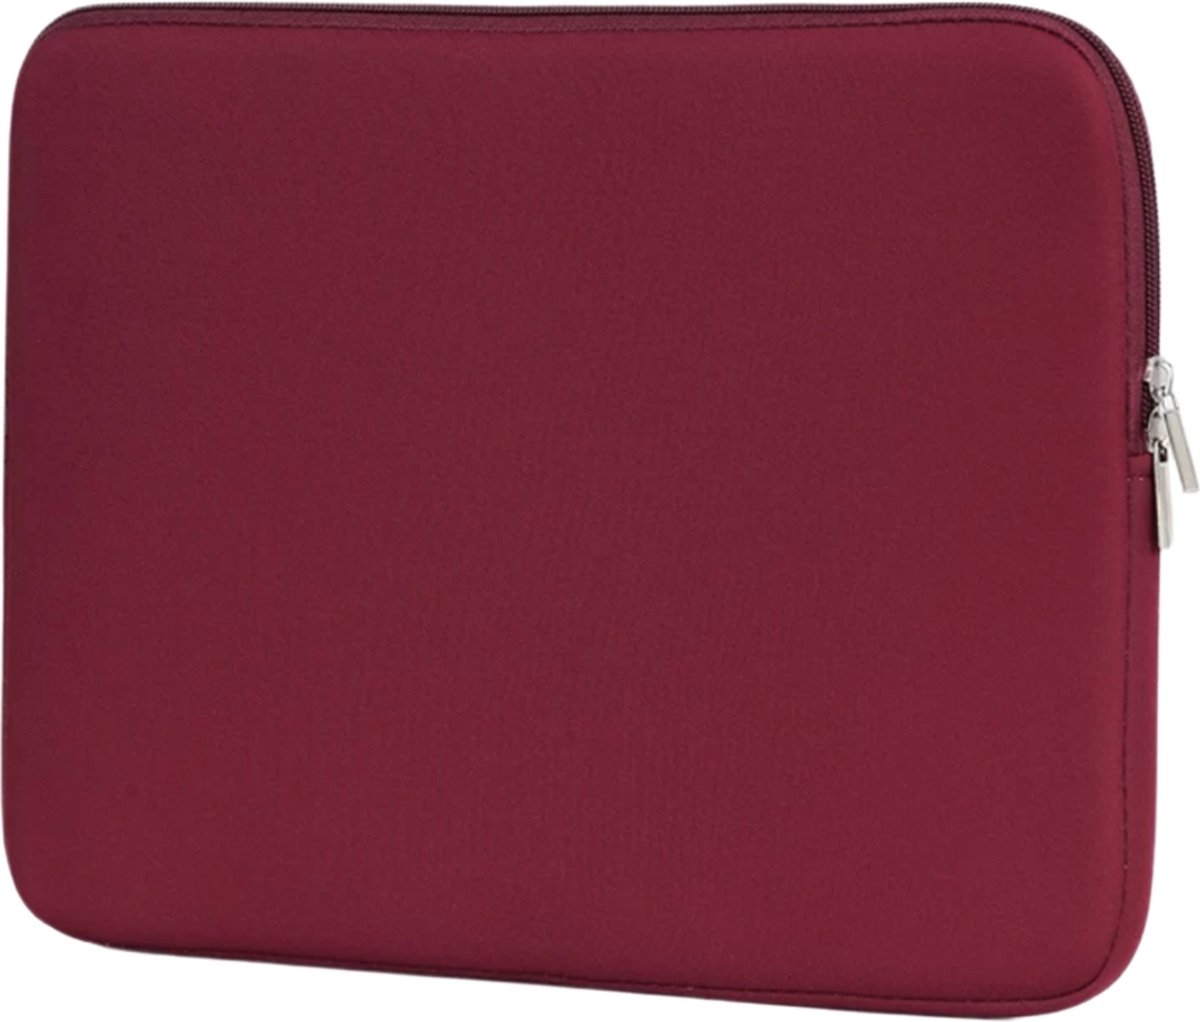 Laptop sleeve Waterdichte laptoptas - Dubbele Ritssluiting - Soft Touch - Laptophoes - 15,6 inch - Extra bescherming bordeaux rood